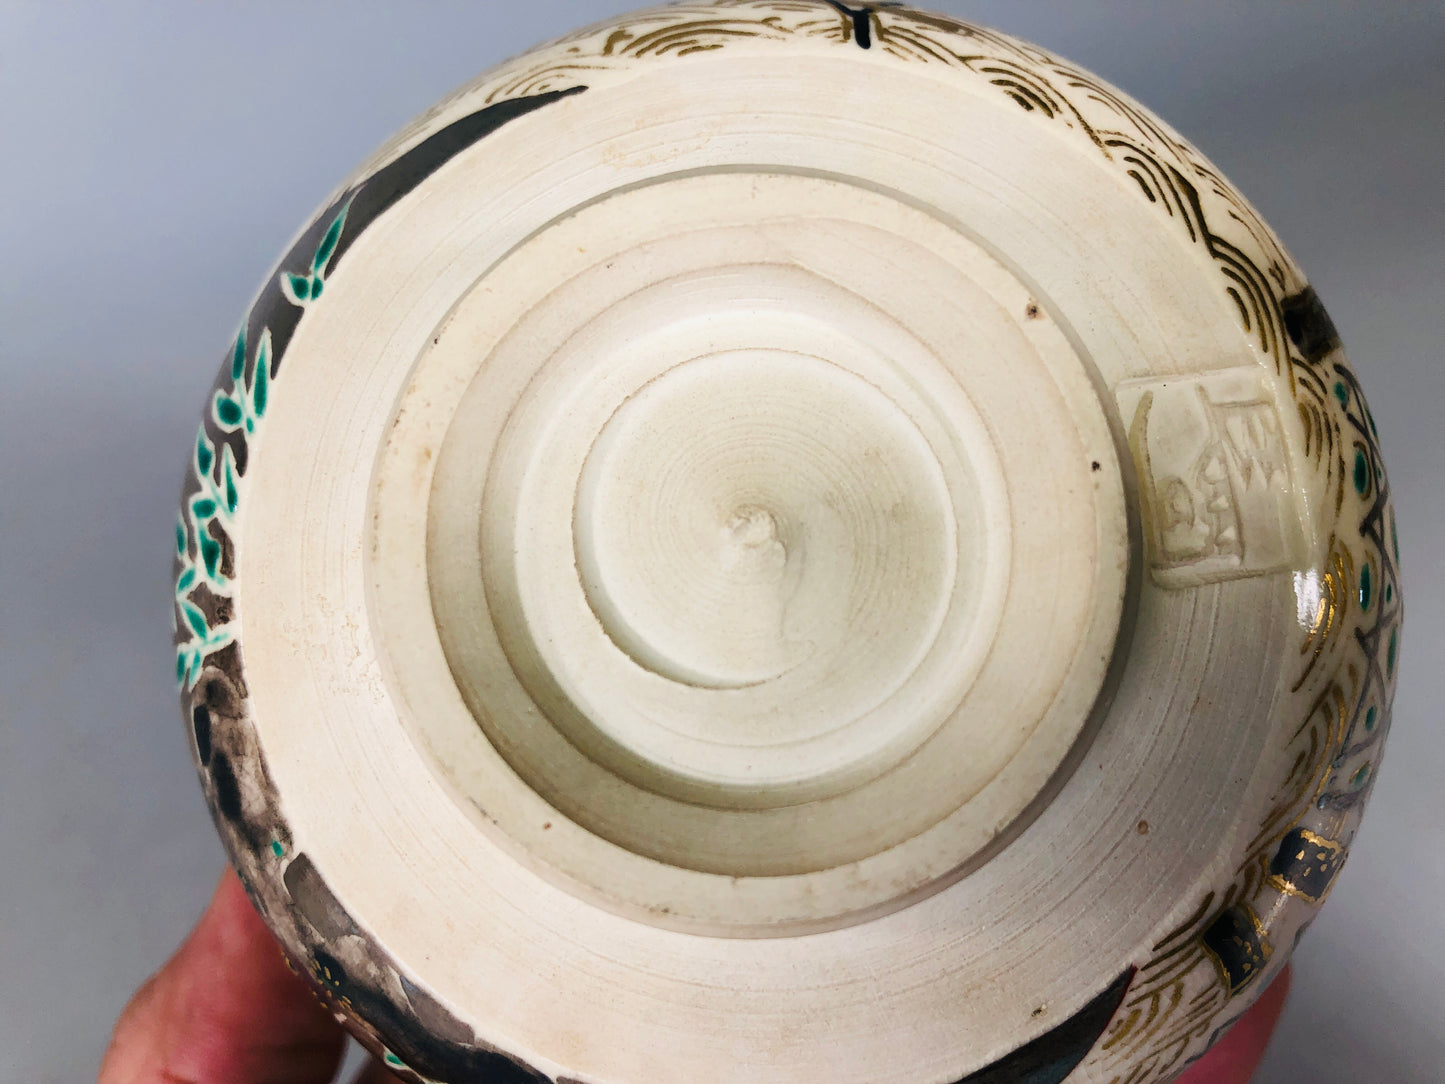 Y6535 [VIDEO] CHAWAN Kyo-ware bowl signed box Ninsei copy Japan antique tea ceremony